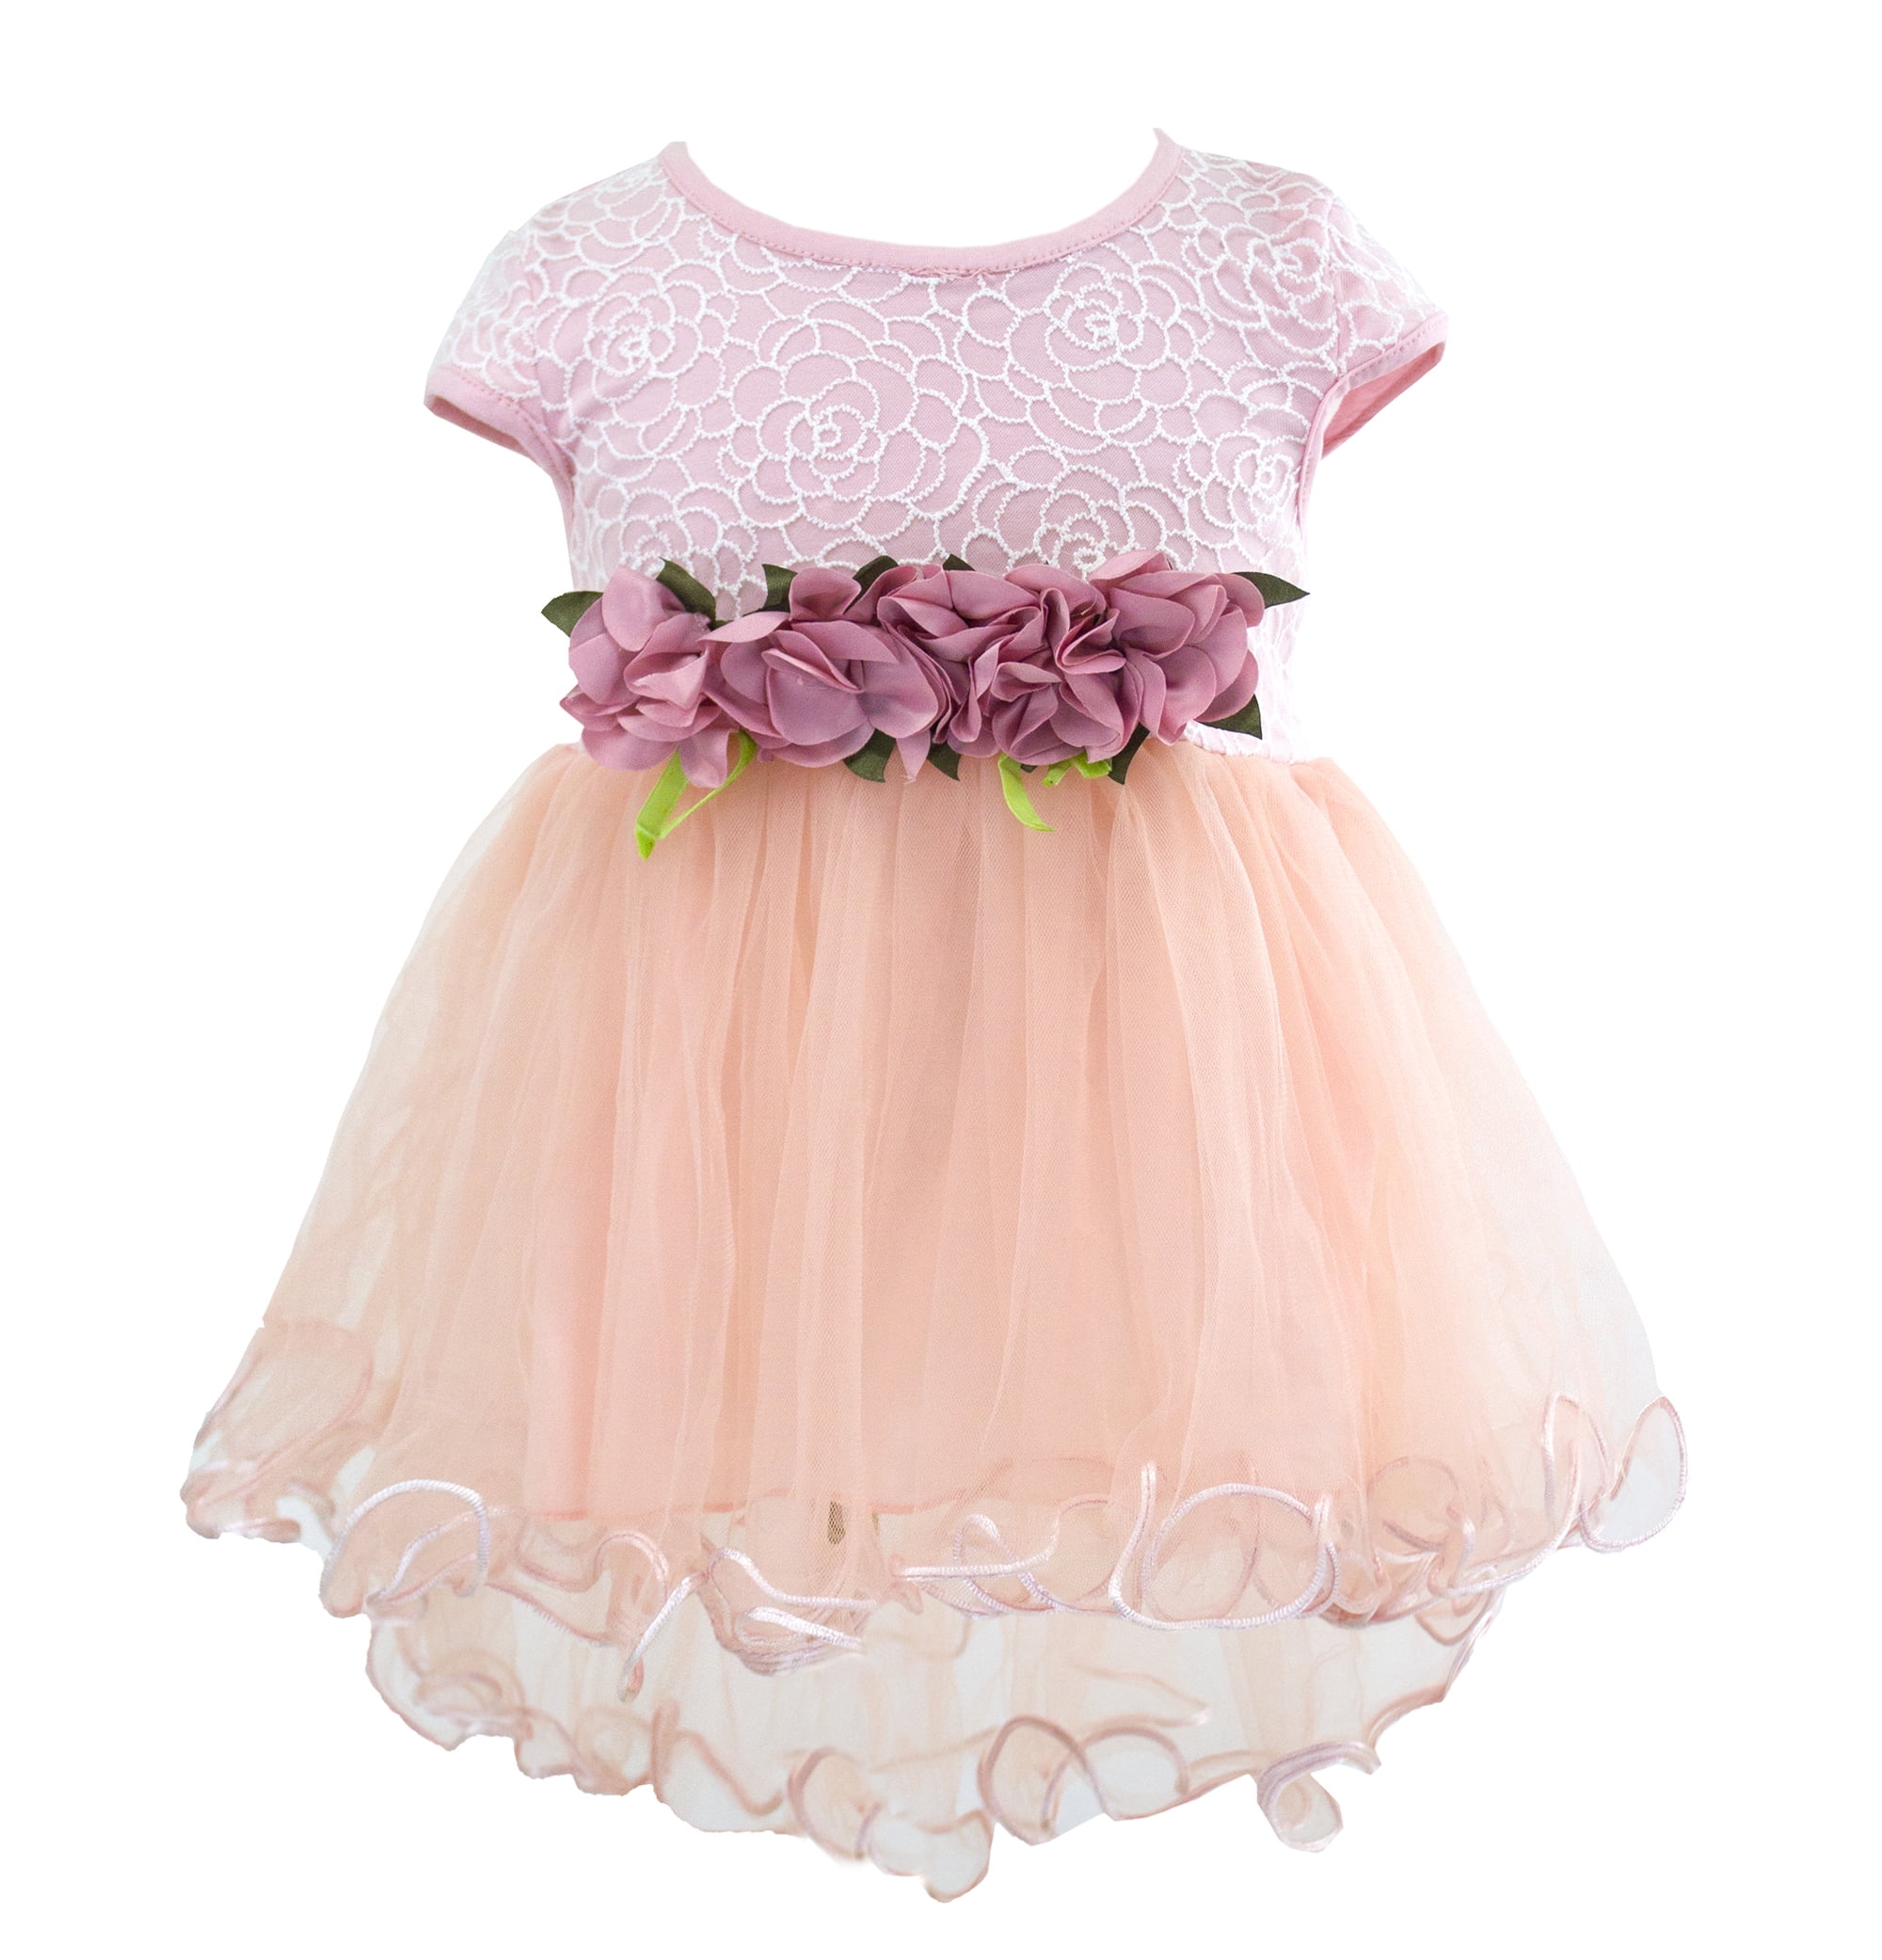 Styles I Love Infant Baby Girls Sleeveless Lace Flower Princess Tulle ...